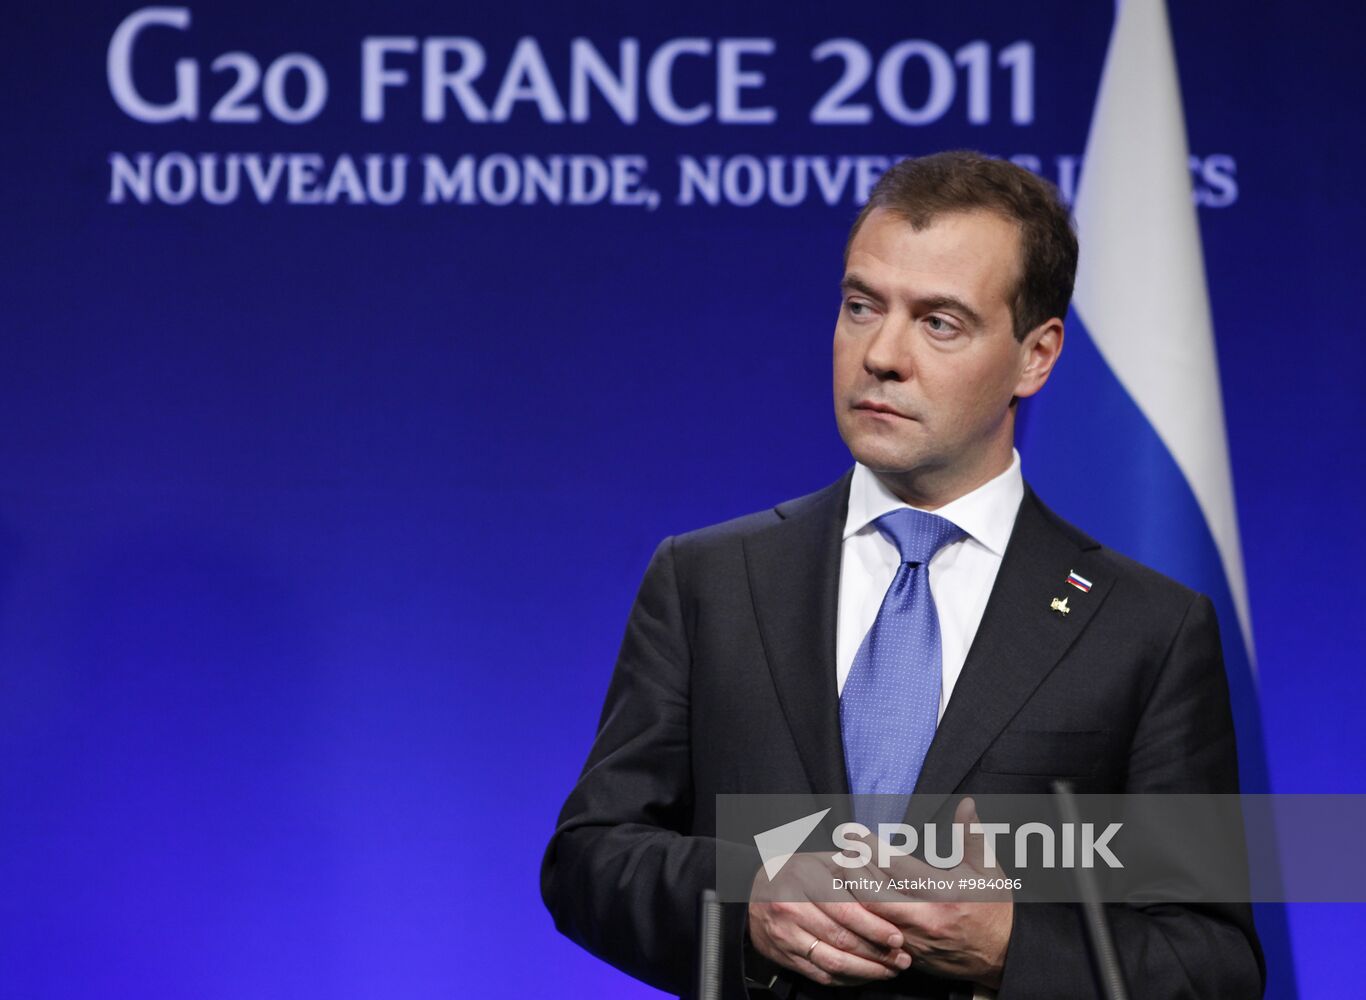 Dmitri Medvedev takes part in G20 summit, Cannes